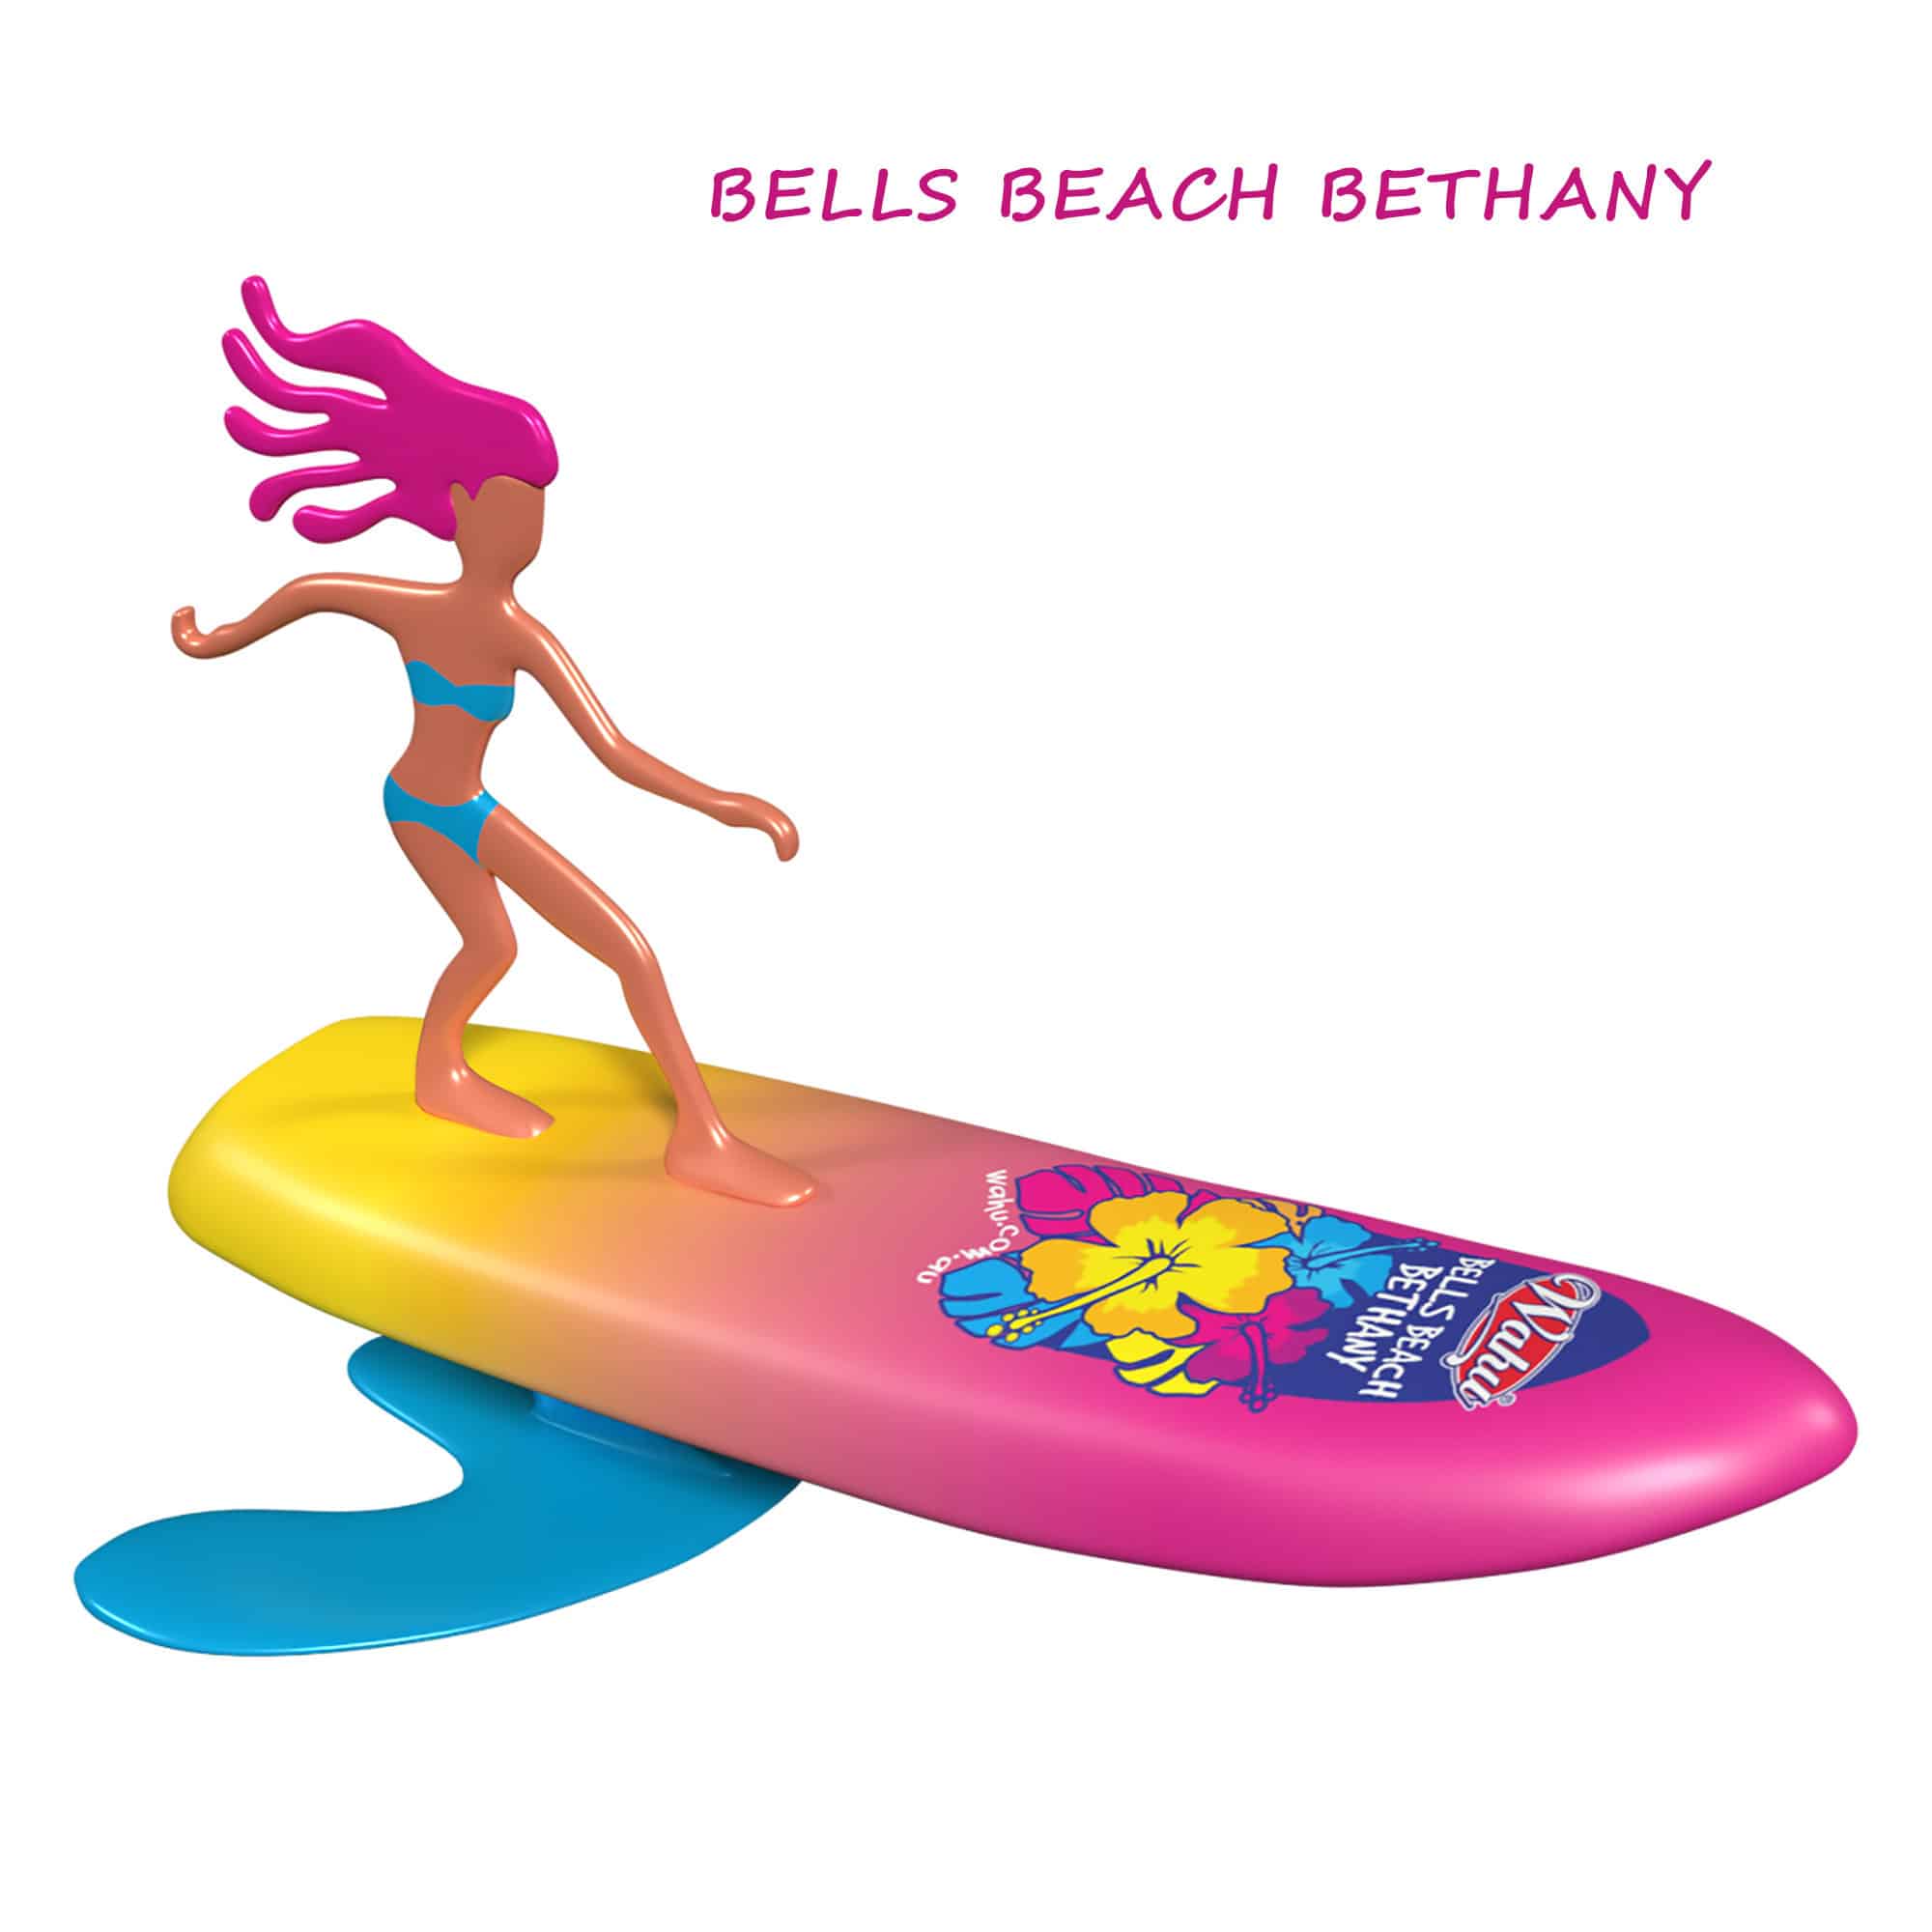 Wahu - Surfer Dudes - Bells Beach Bethany